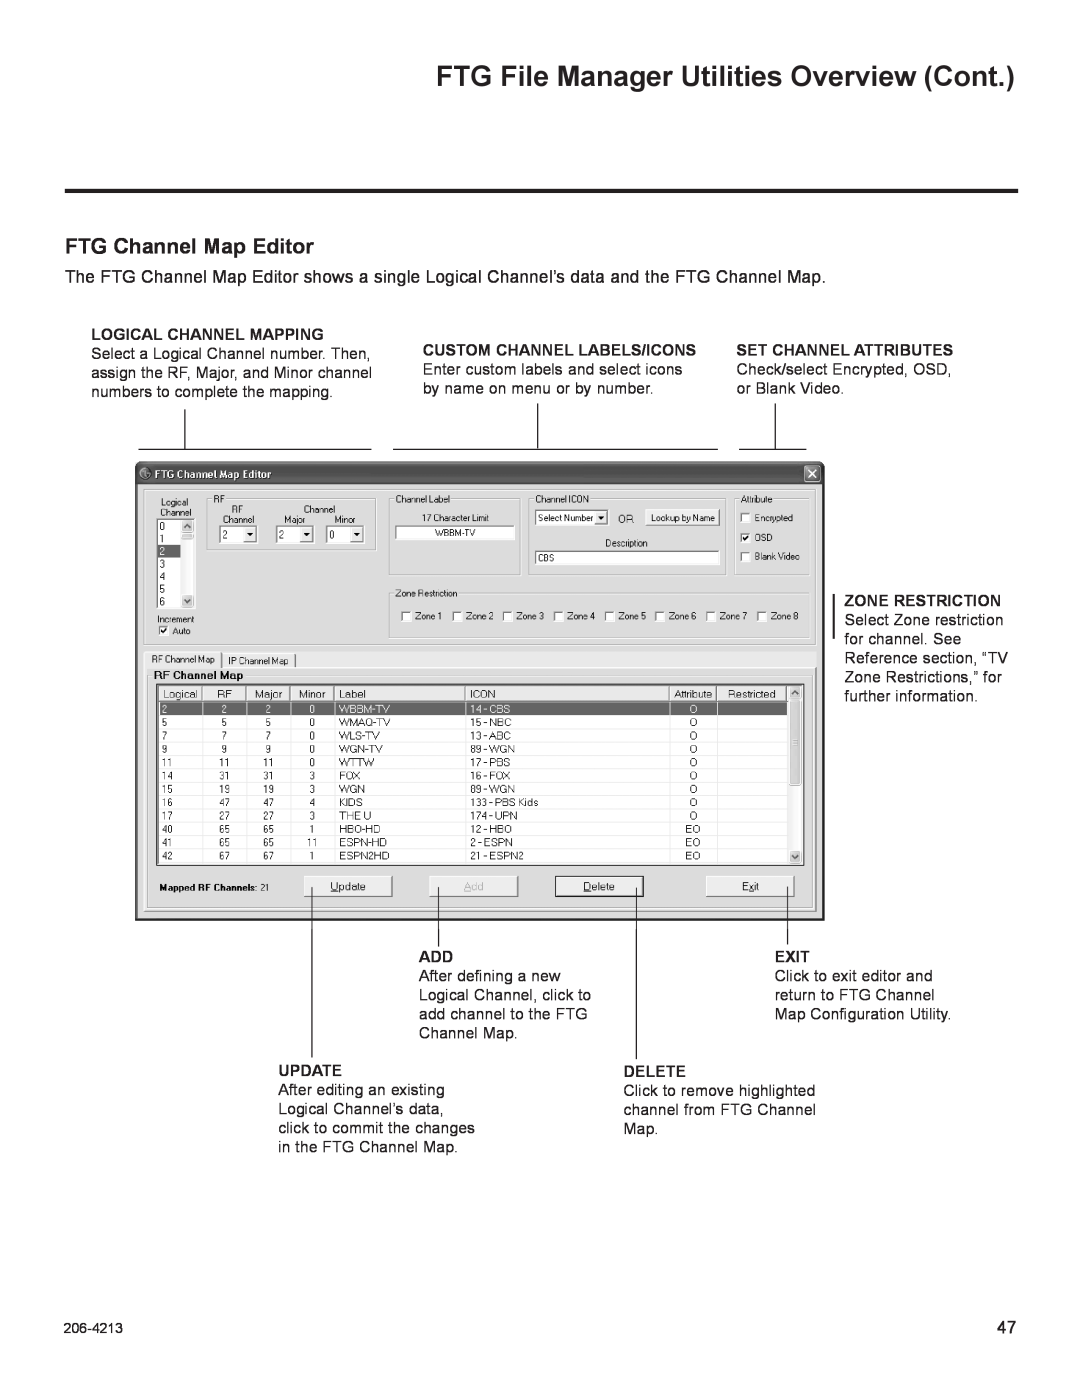 LG Electronics 37LT670H, 55LS675H, 42LT670H, 32LT670H FTG Channel Map Editor, FTG File Manager Utilities Overview Cont 